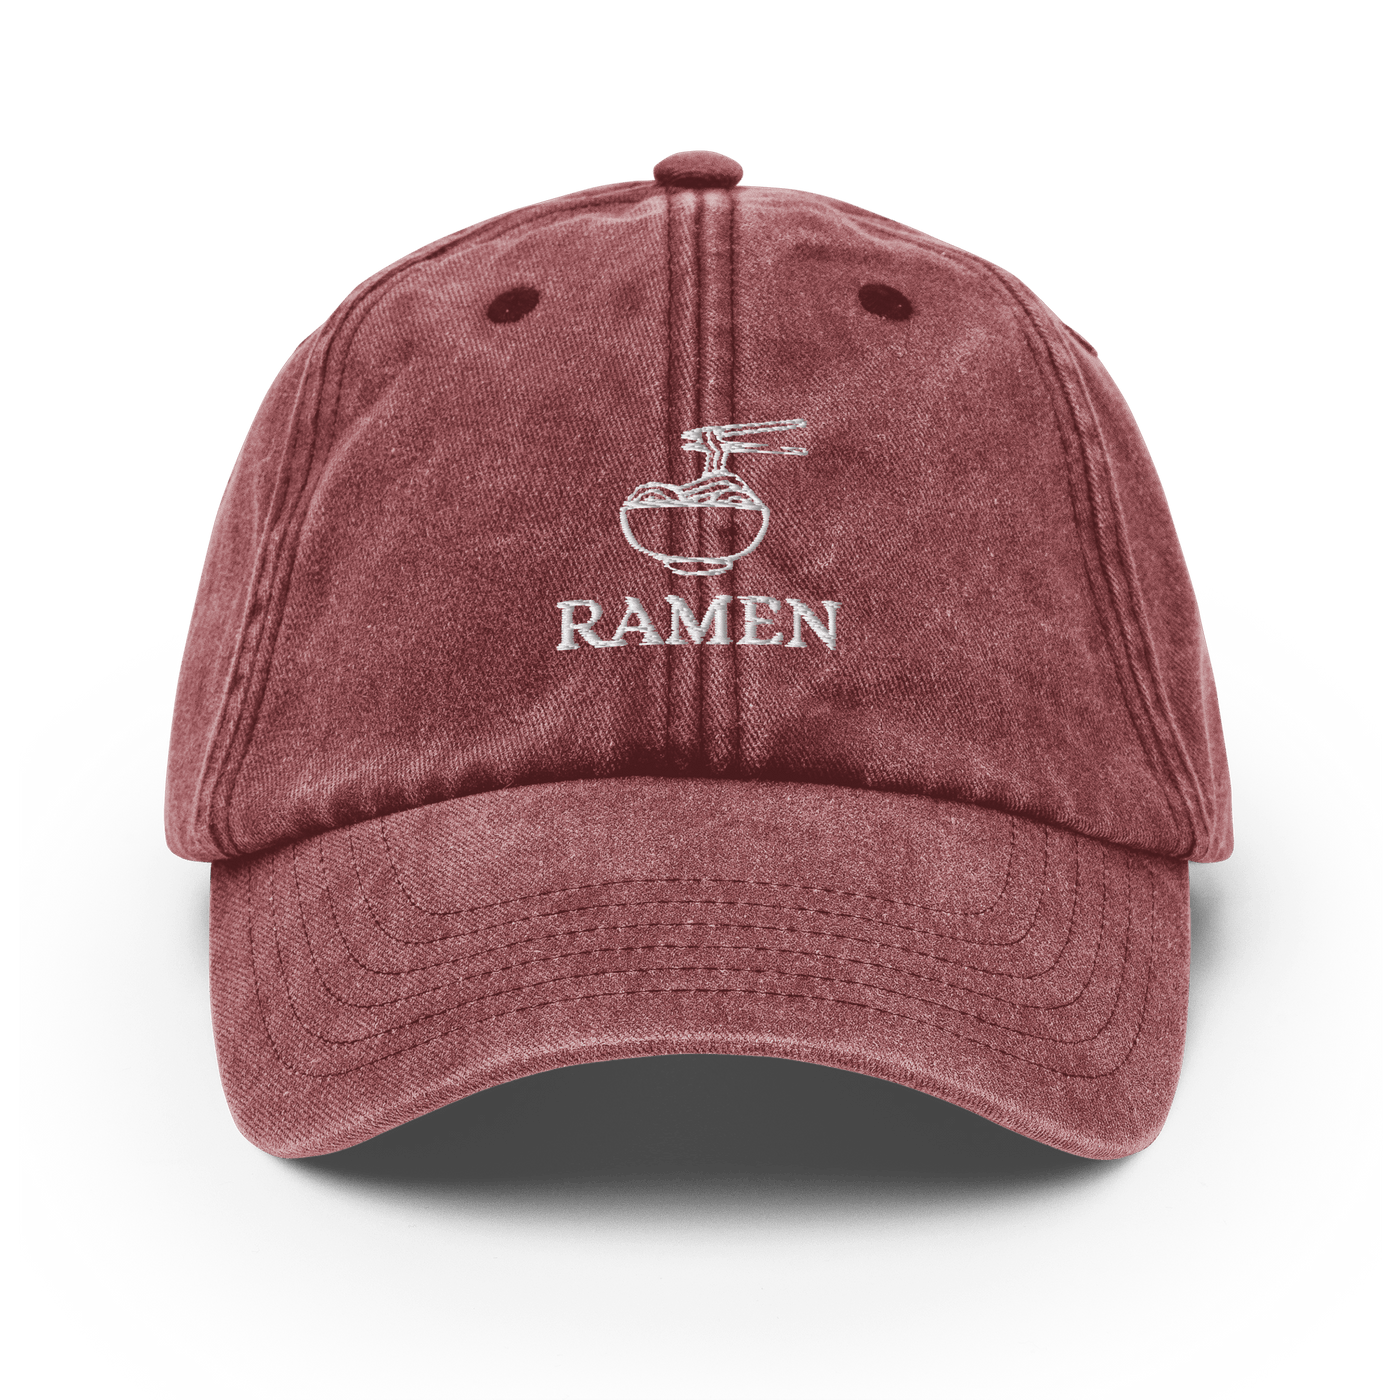 Ramen Bowl Vintage Hat - Vintage Red - - Just Another Cap Store